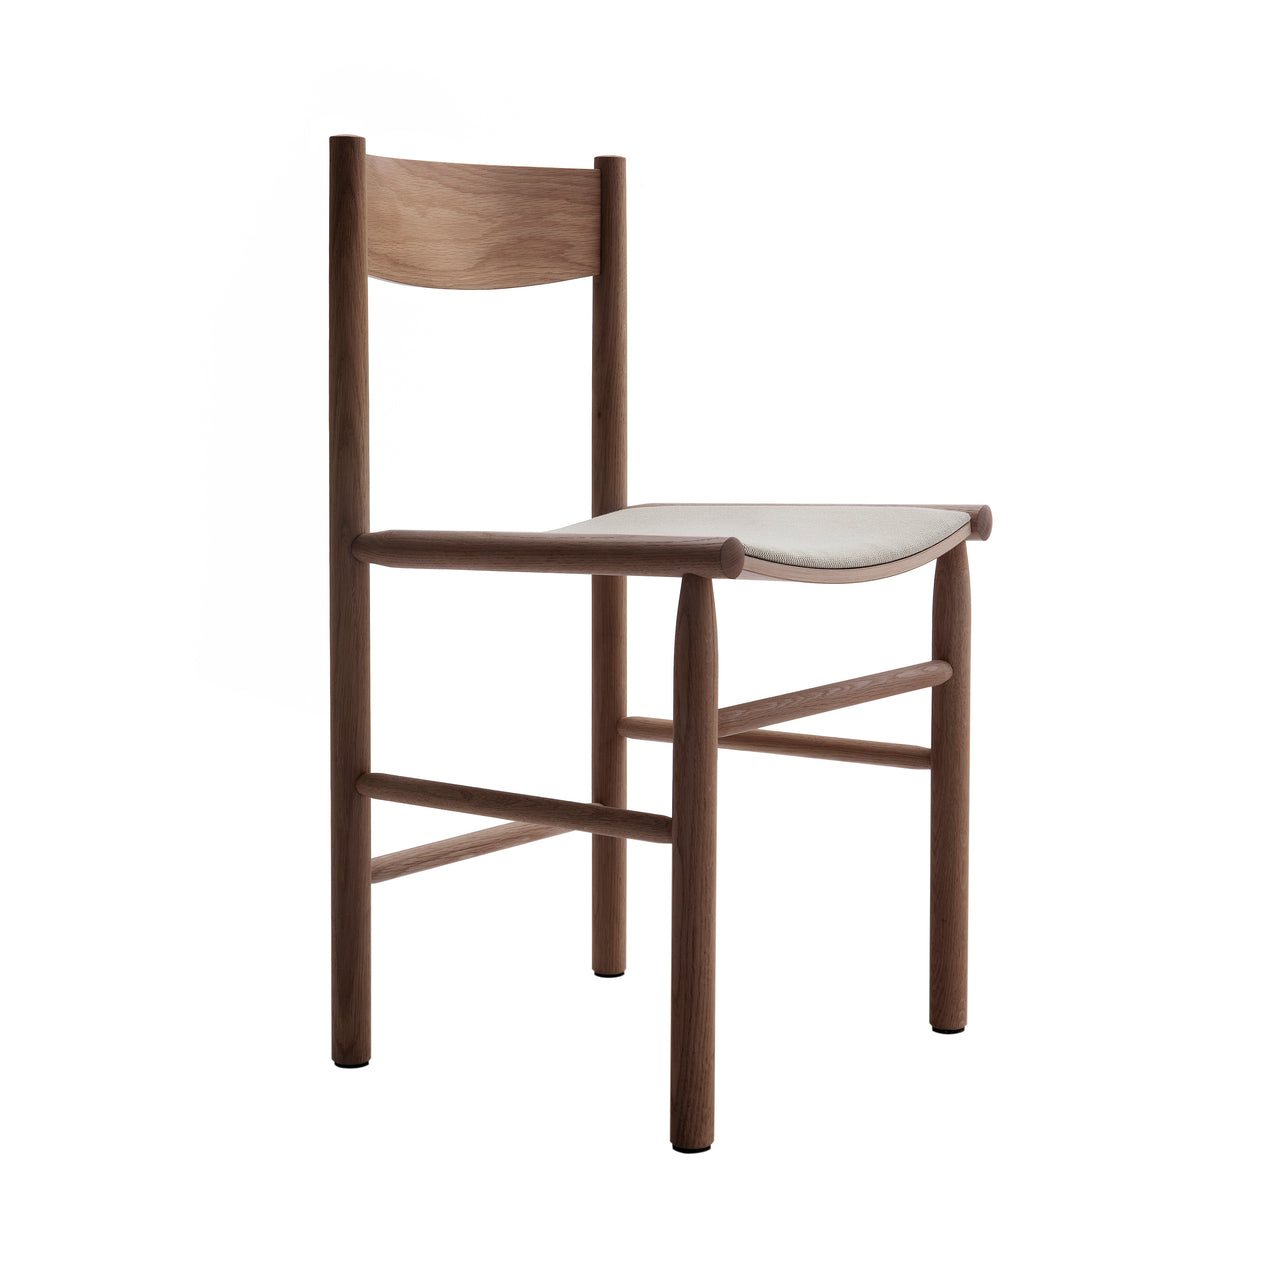 Akademia Chair: Upholstered + Smoked Oak